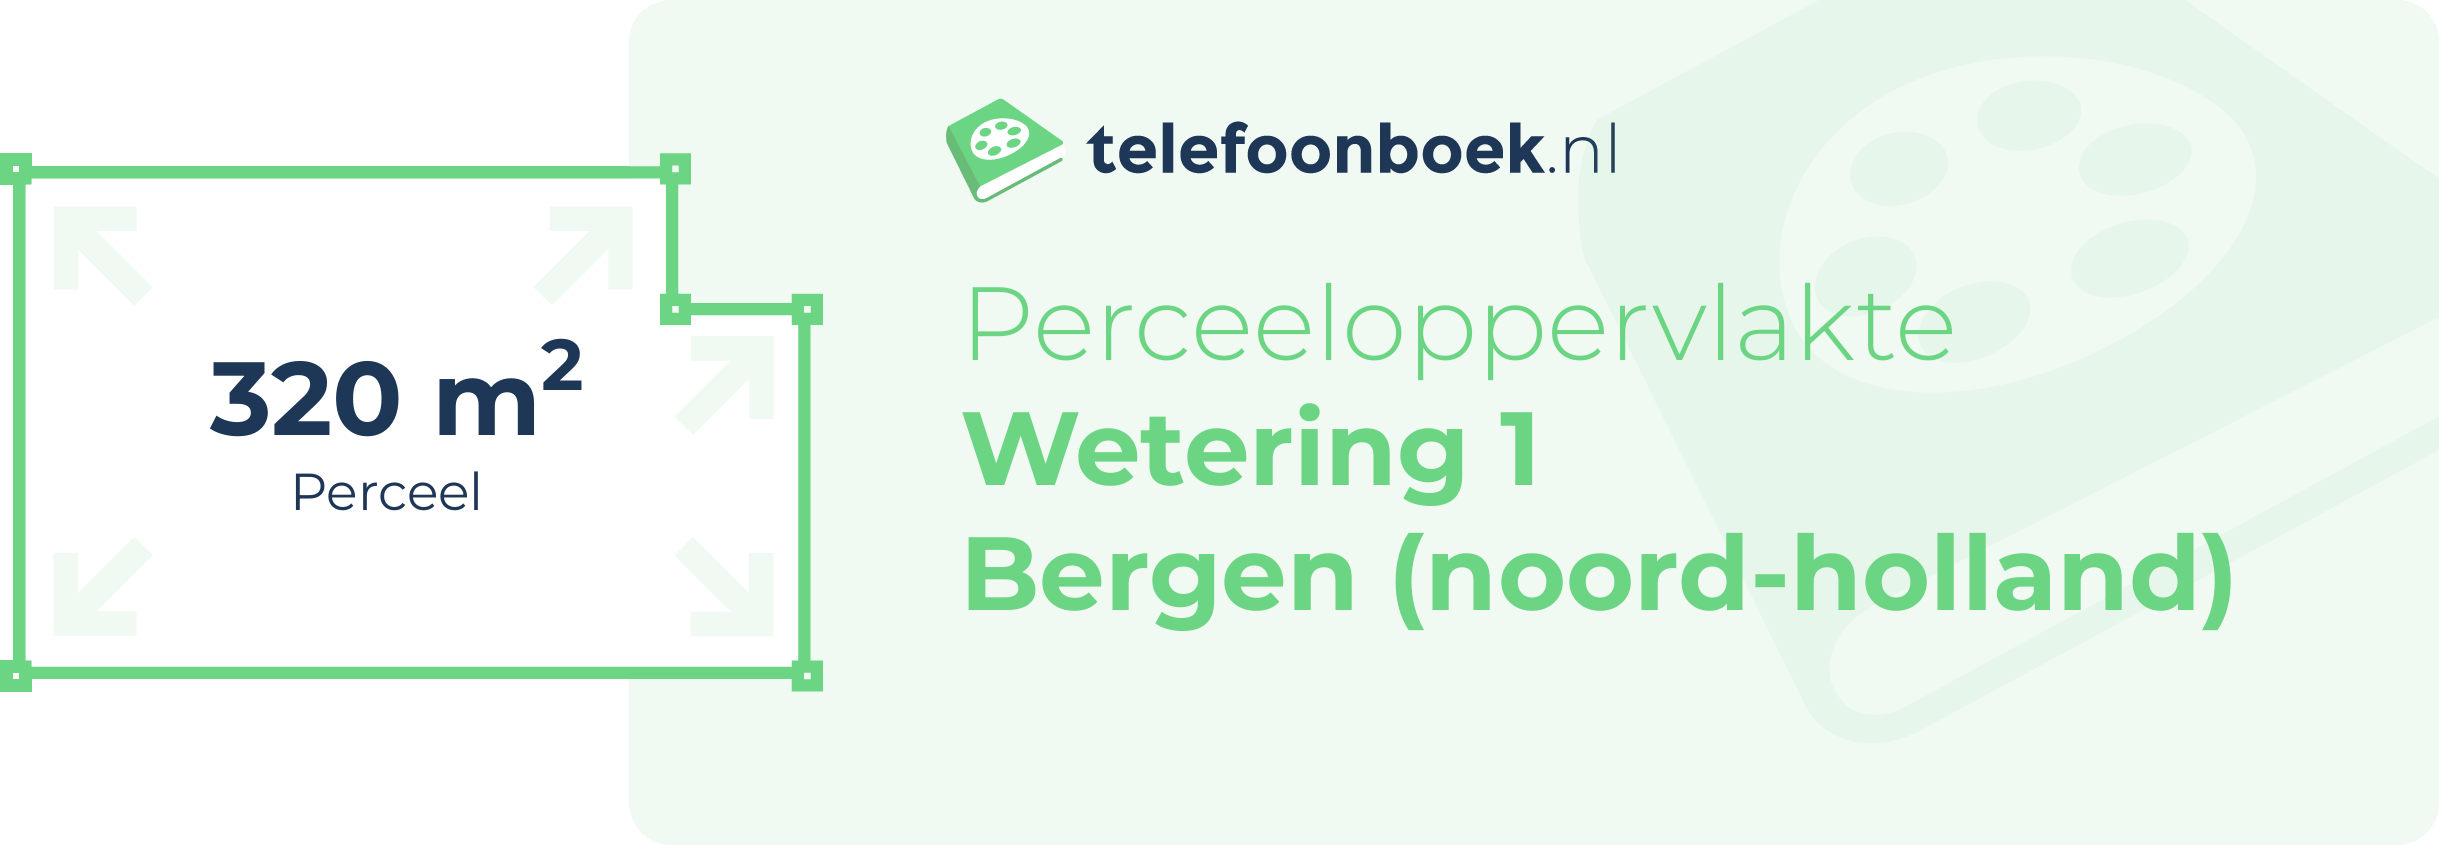 Perceeloppervlakte Wetering 1 Bergen (Noord-Holland)